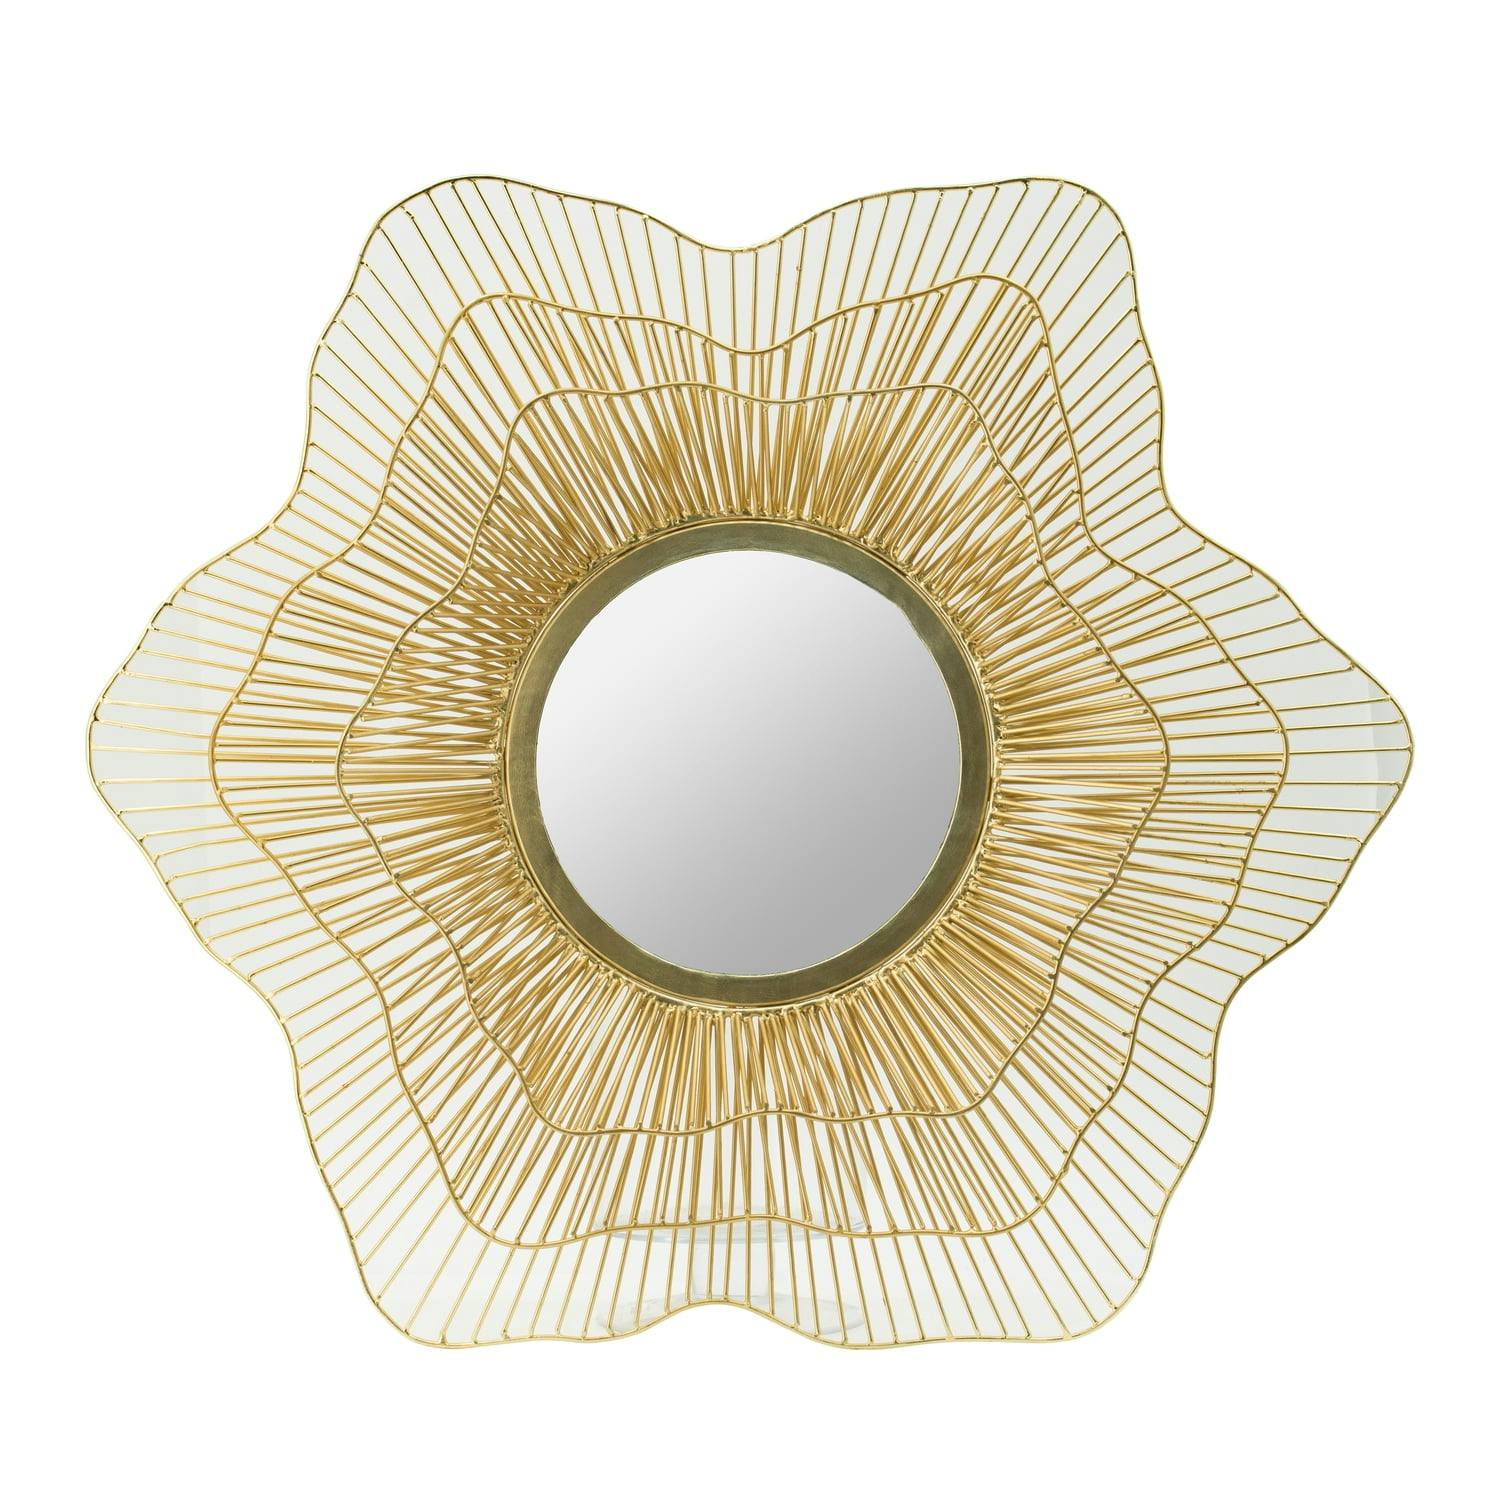 27" Gold Sunburst Round Wall Mirror with Metal Frame